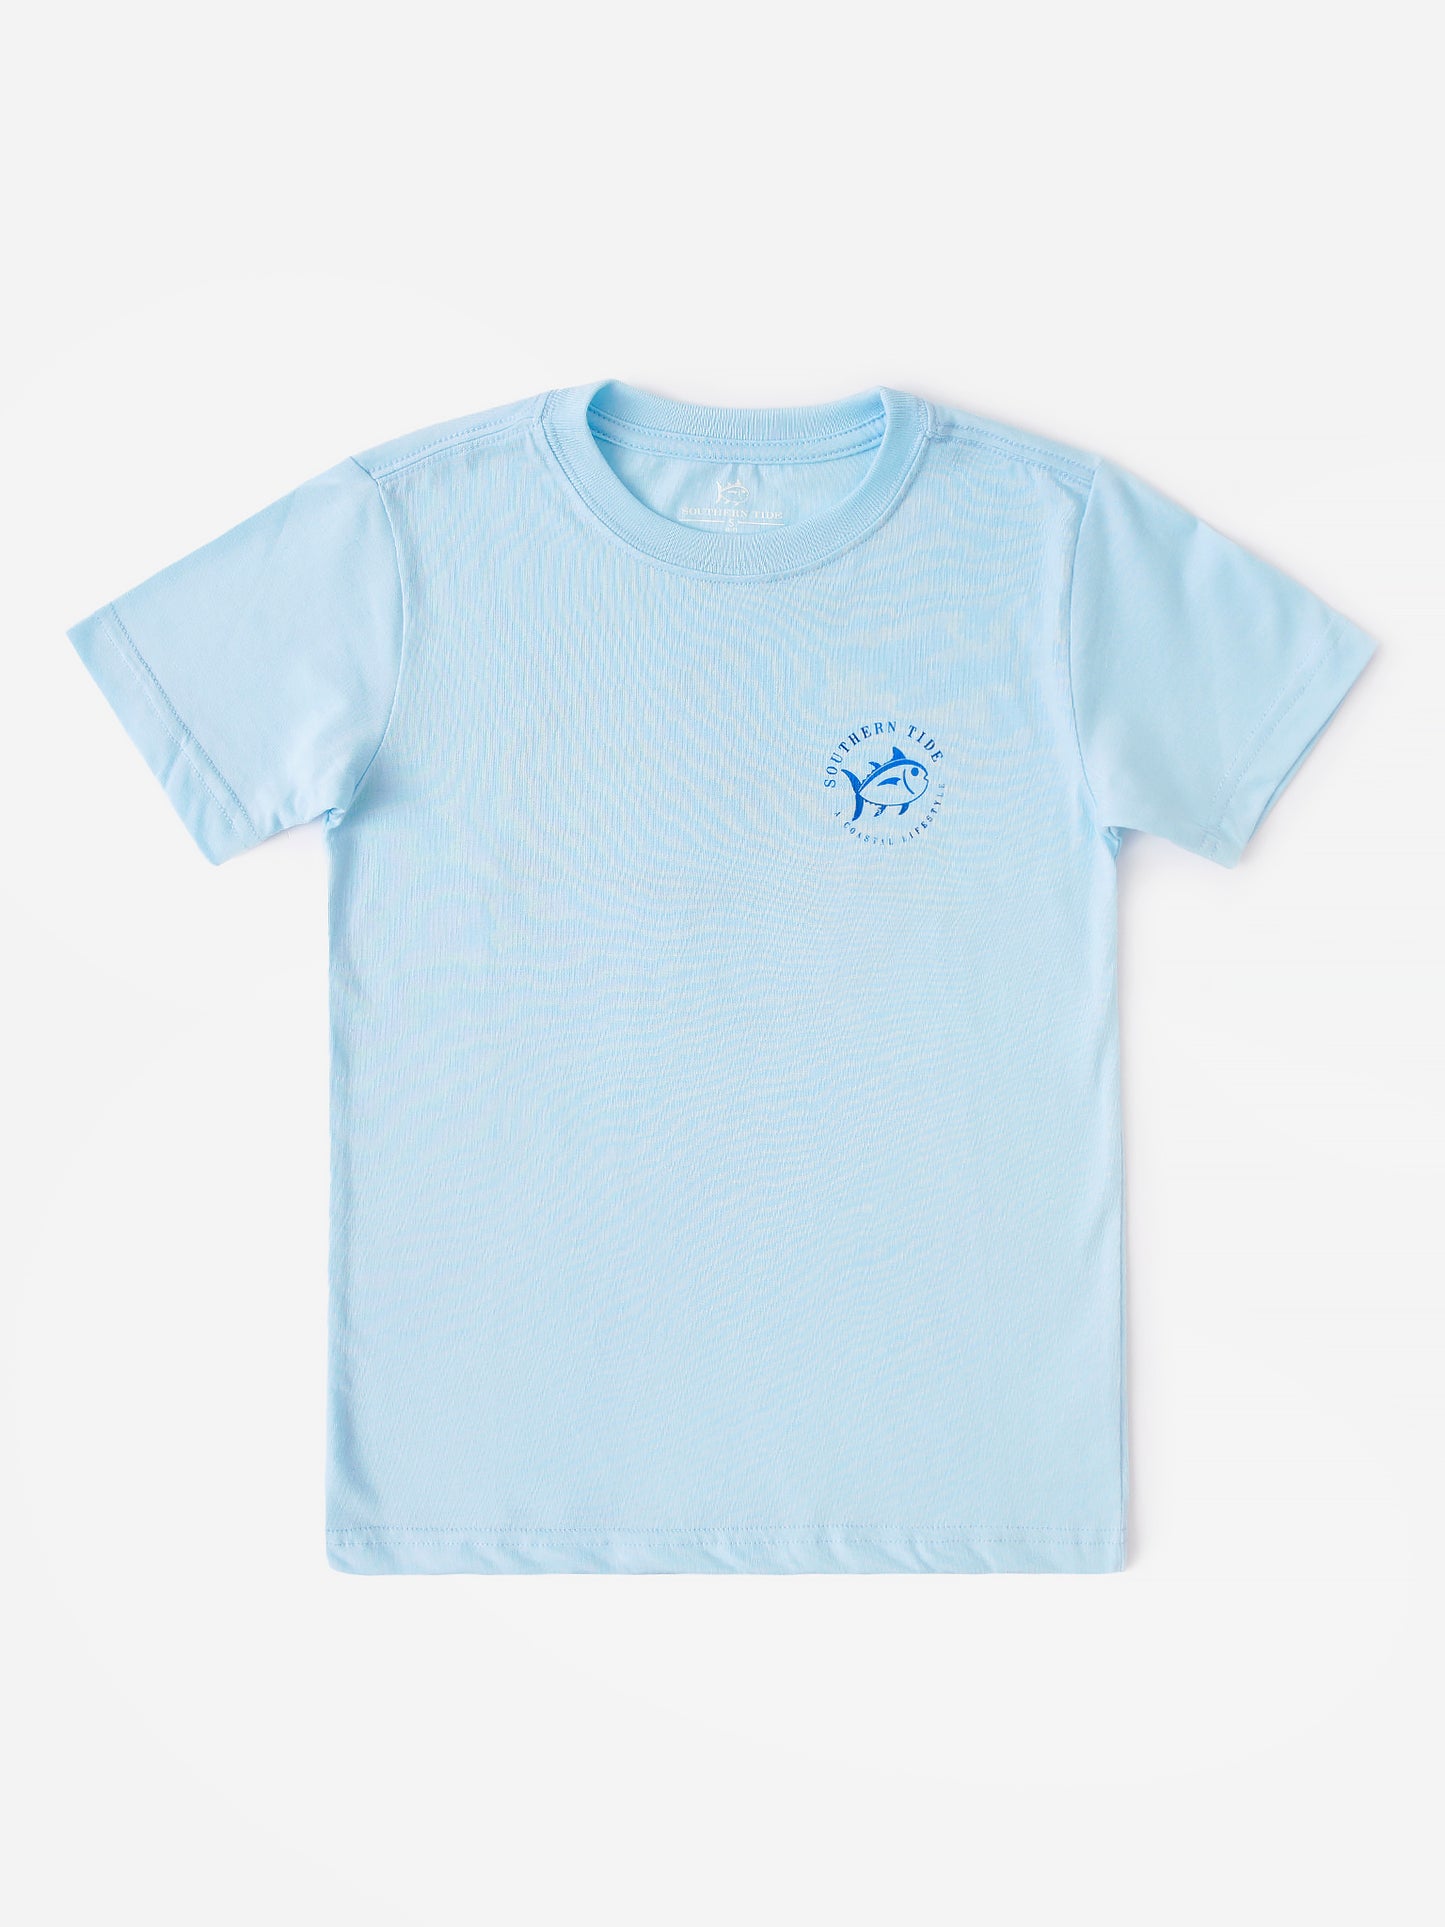 Southern Tide Boys' Shark Press T-shirt